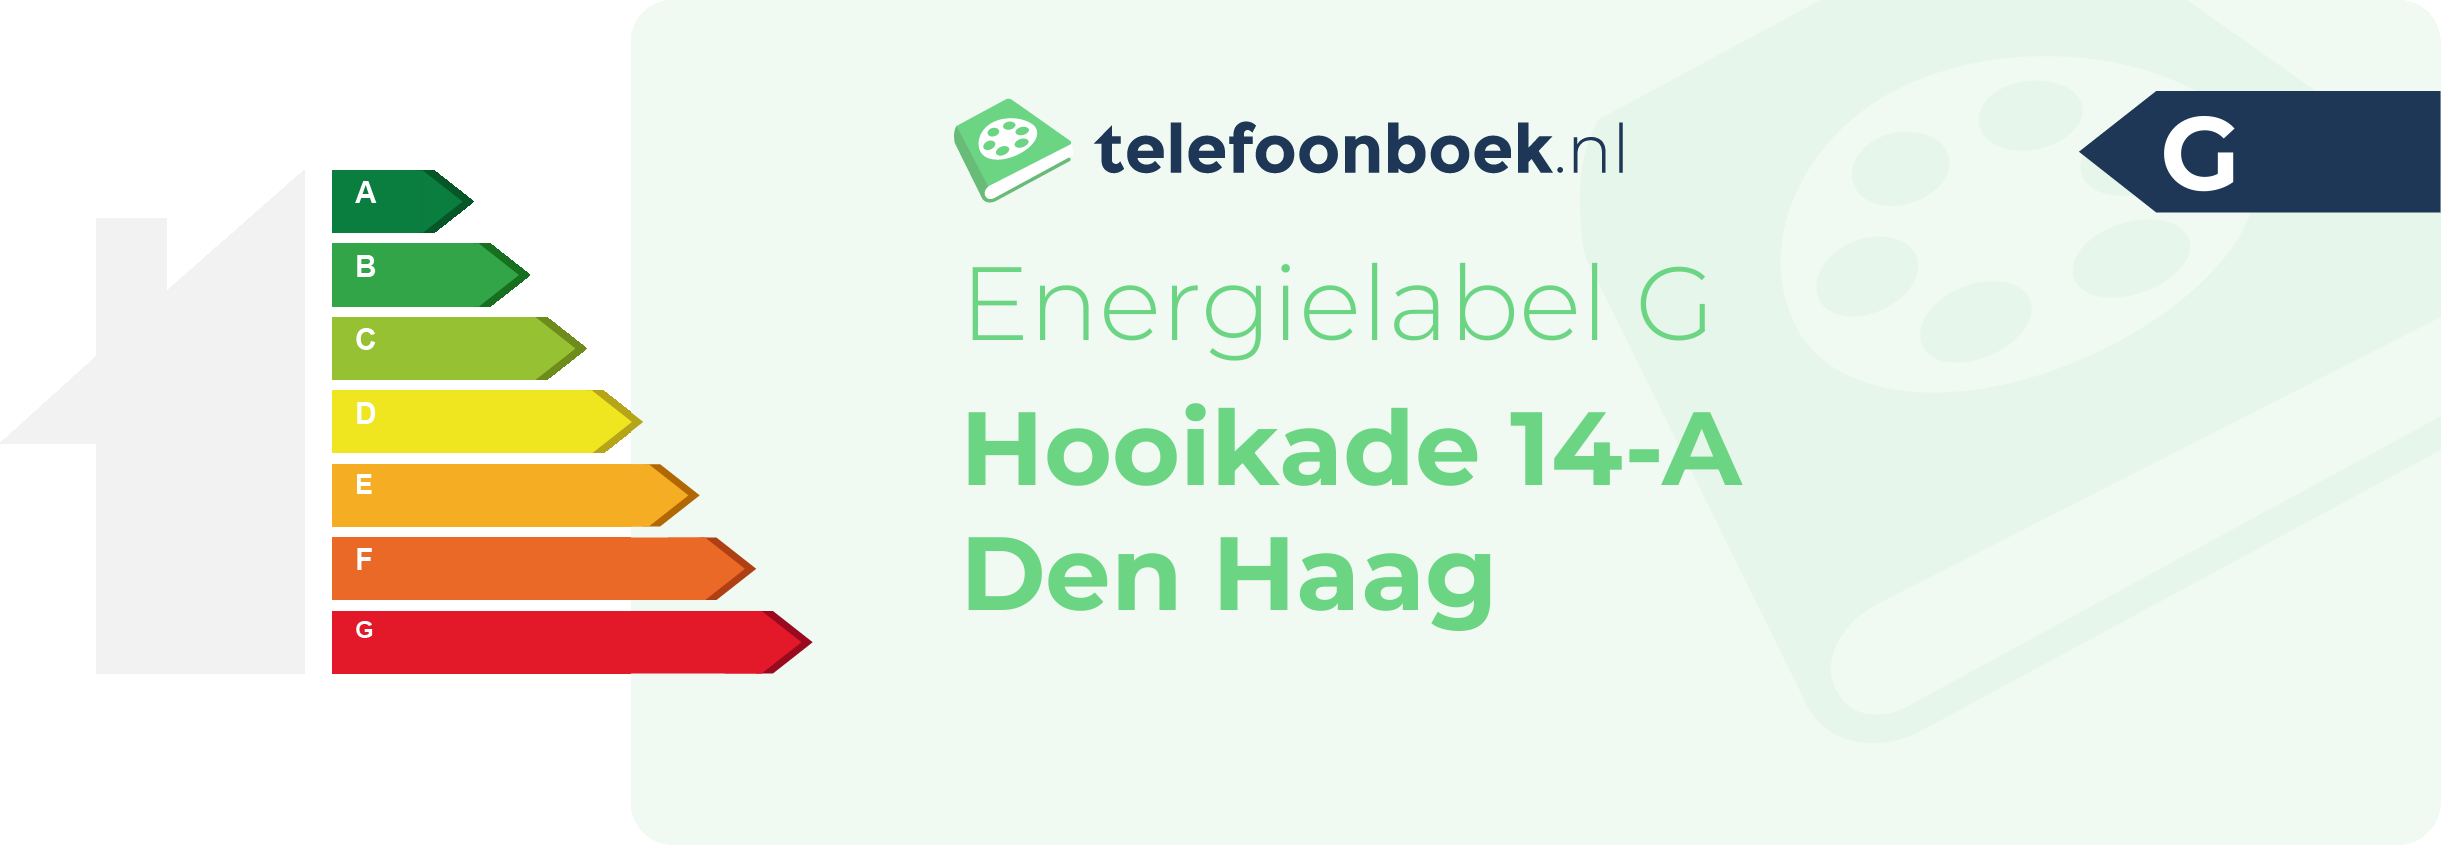 Energielabel Hooikade 14-A Den Haag